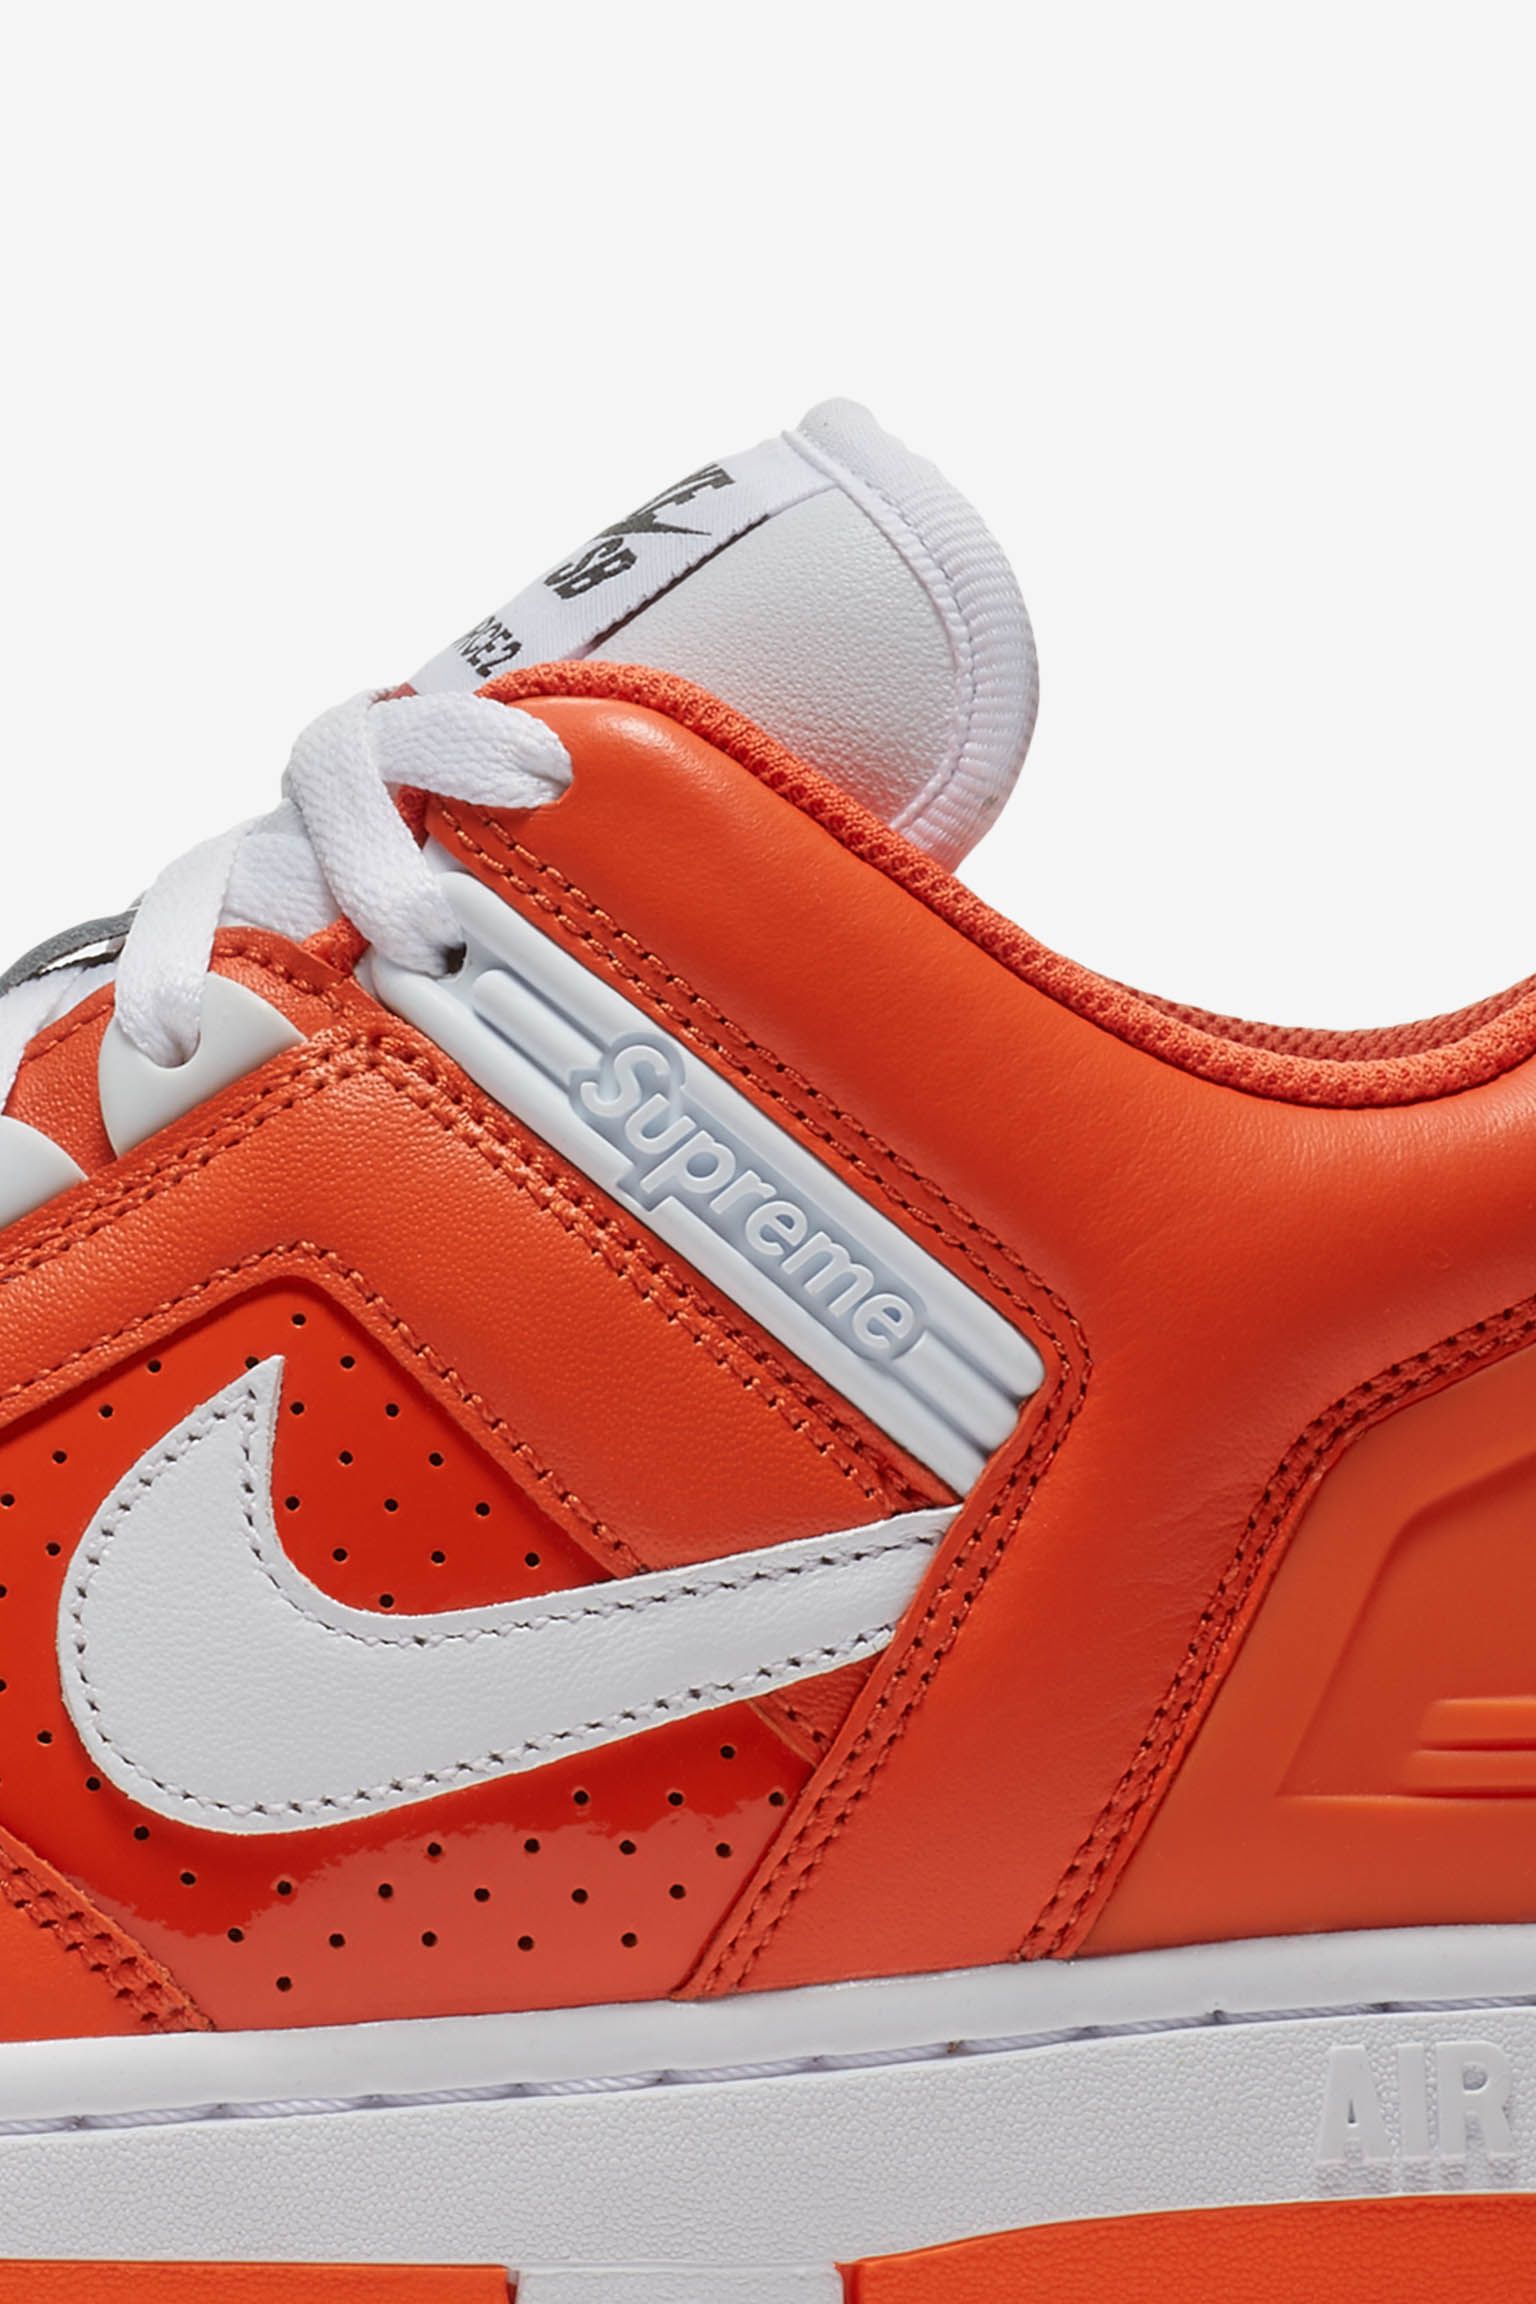 Perceptivo Increíble Conveniente Nike SB AF2 Low Supreme "Orange Blaze". Nike SNKRS ES